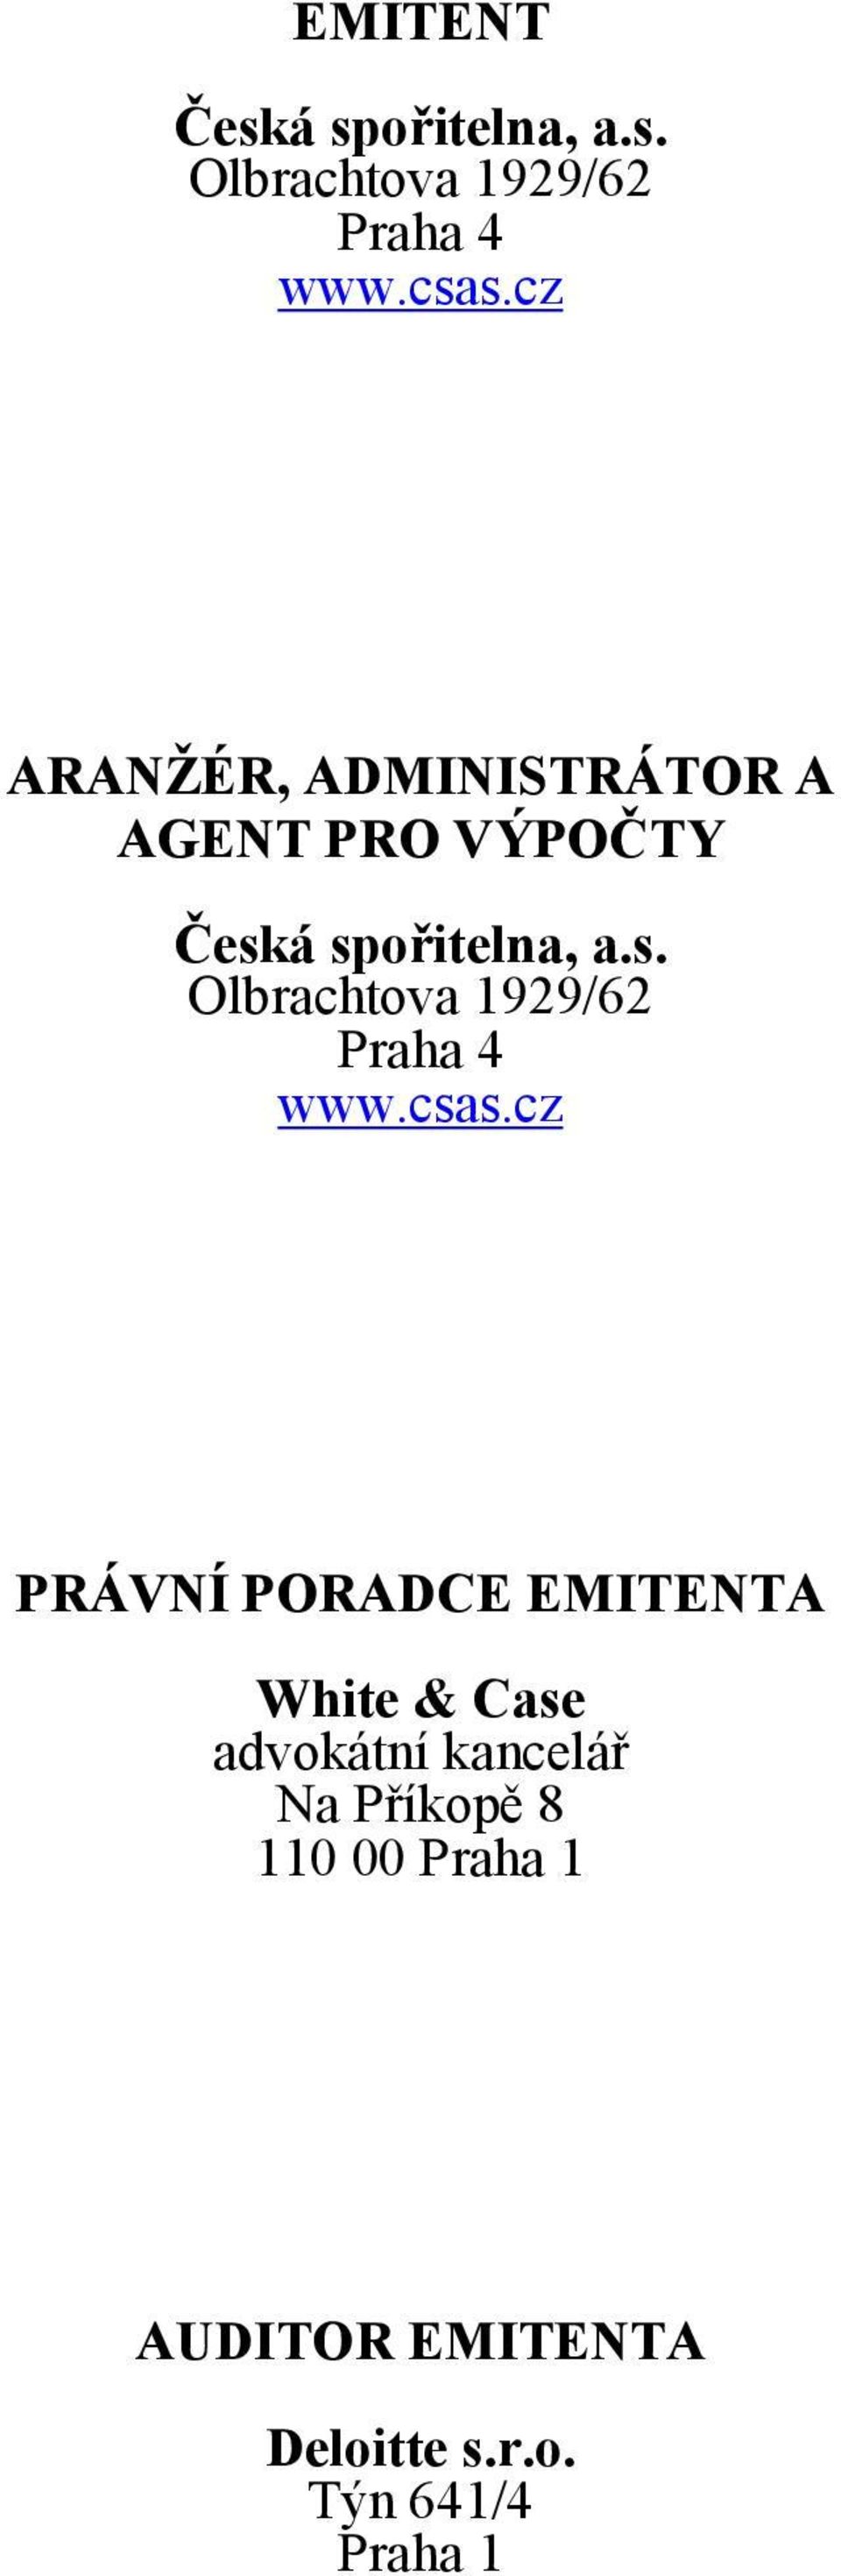 á spořitelna, a.s. Olbrachtova 1929/62 Praha 4 www.csas.